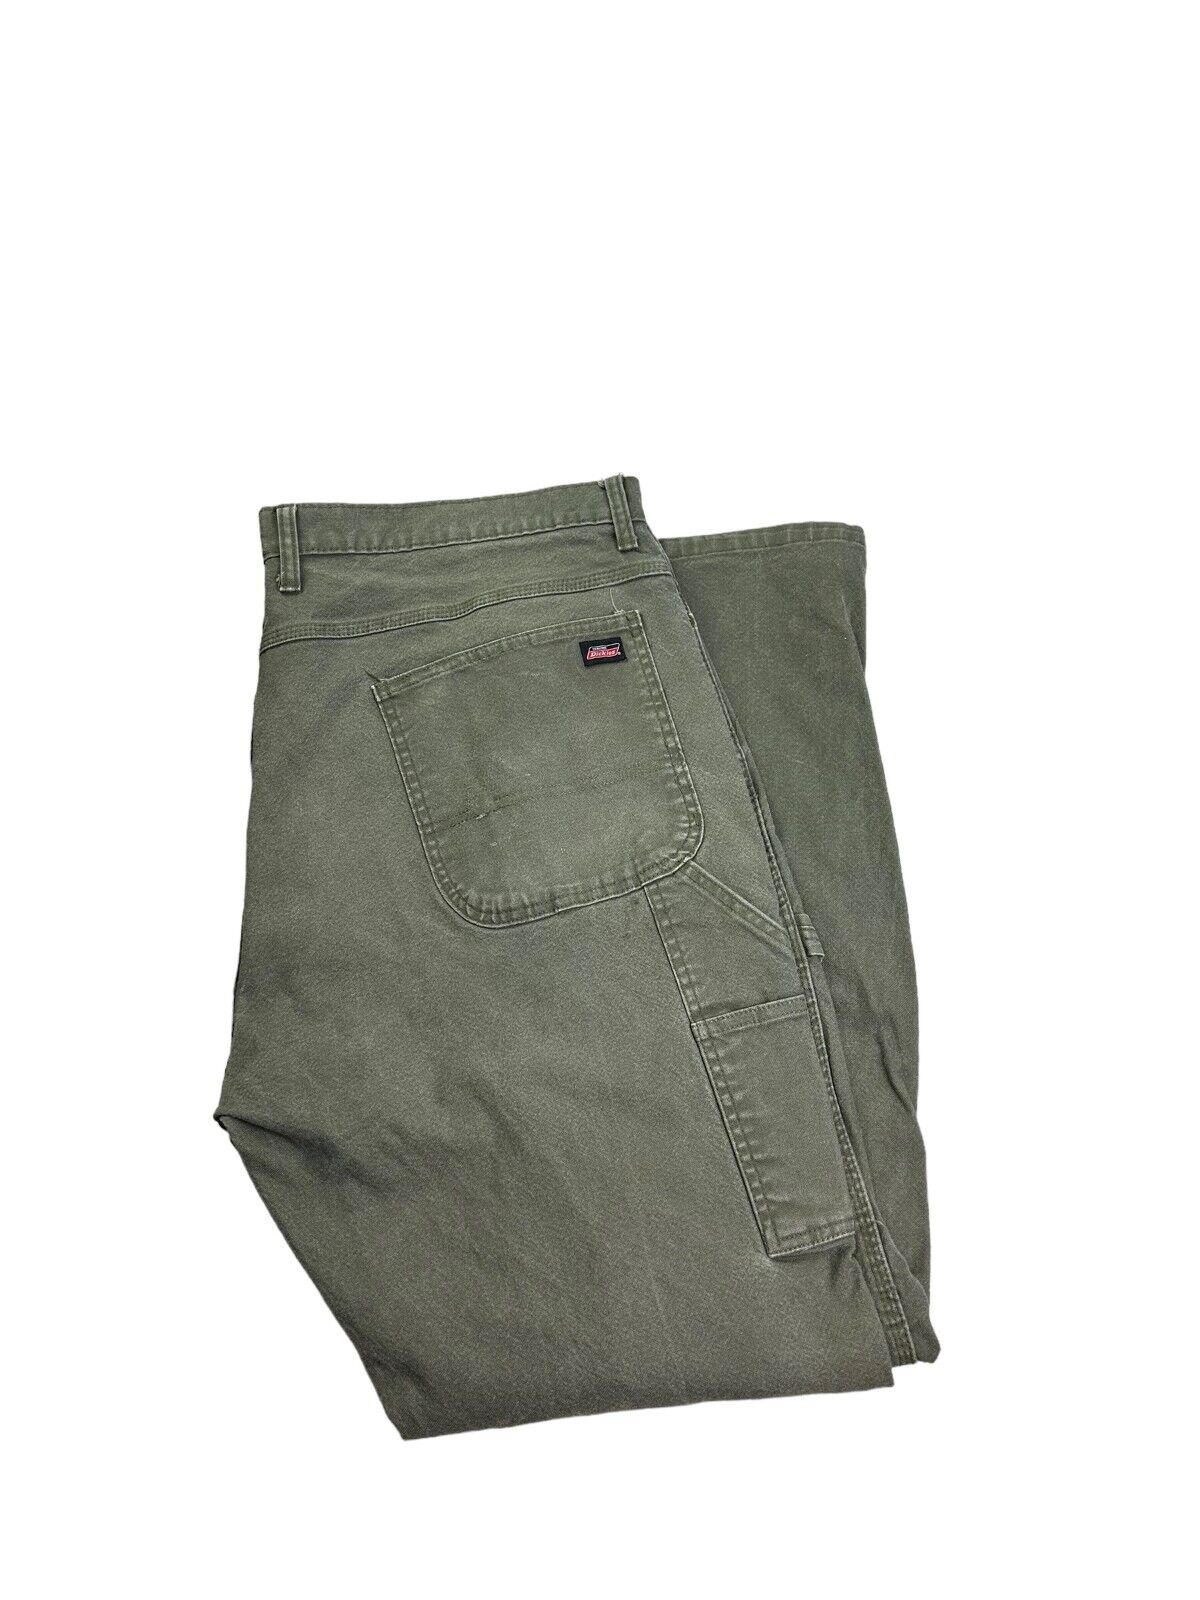 Dickies Canvas Workwear Carpenter Pants Size 42 Green